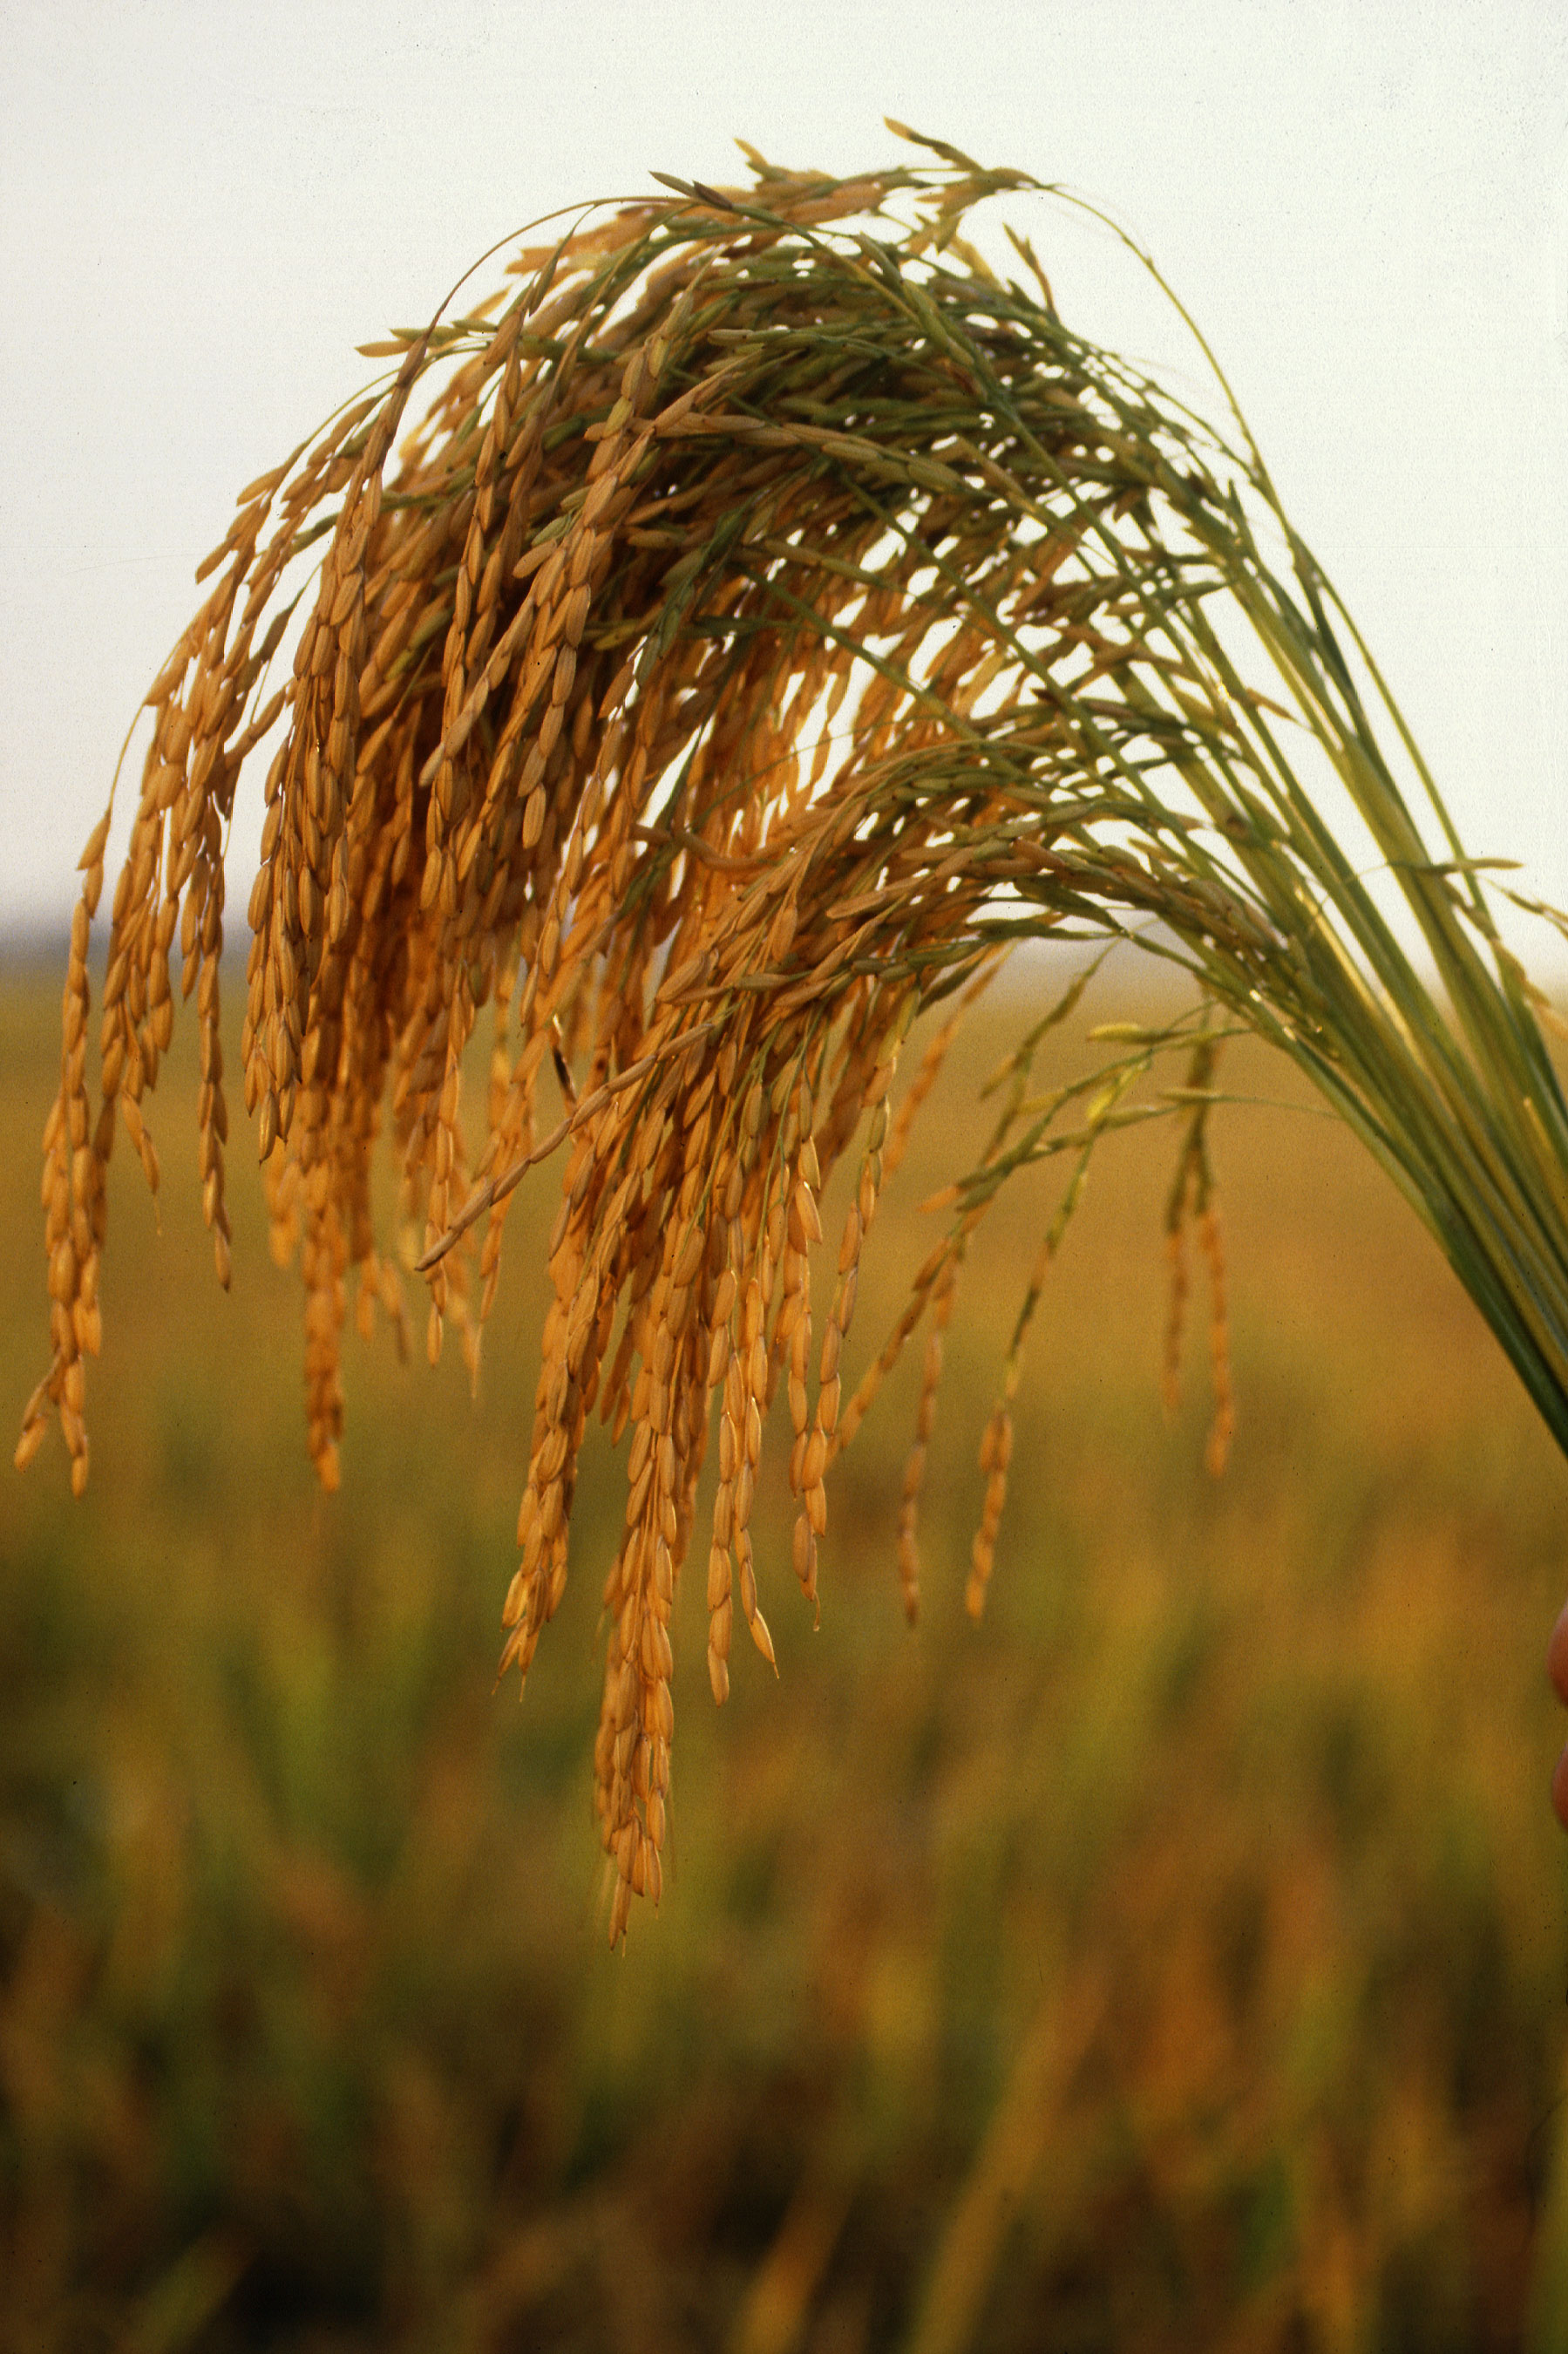 http://upload.wikimedia.org/wikipedia/commons/a/a6/US_long_grain_rice.jpg